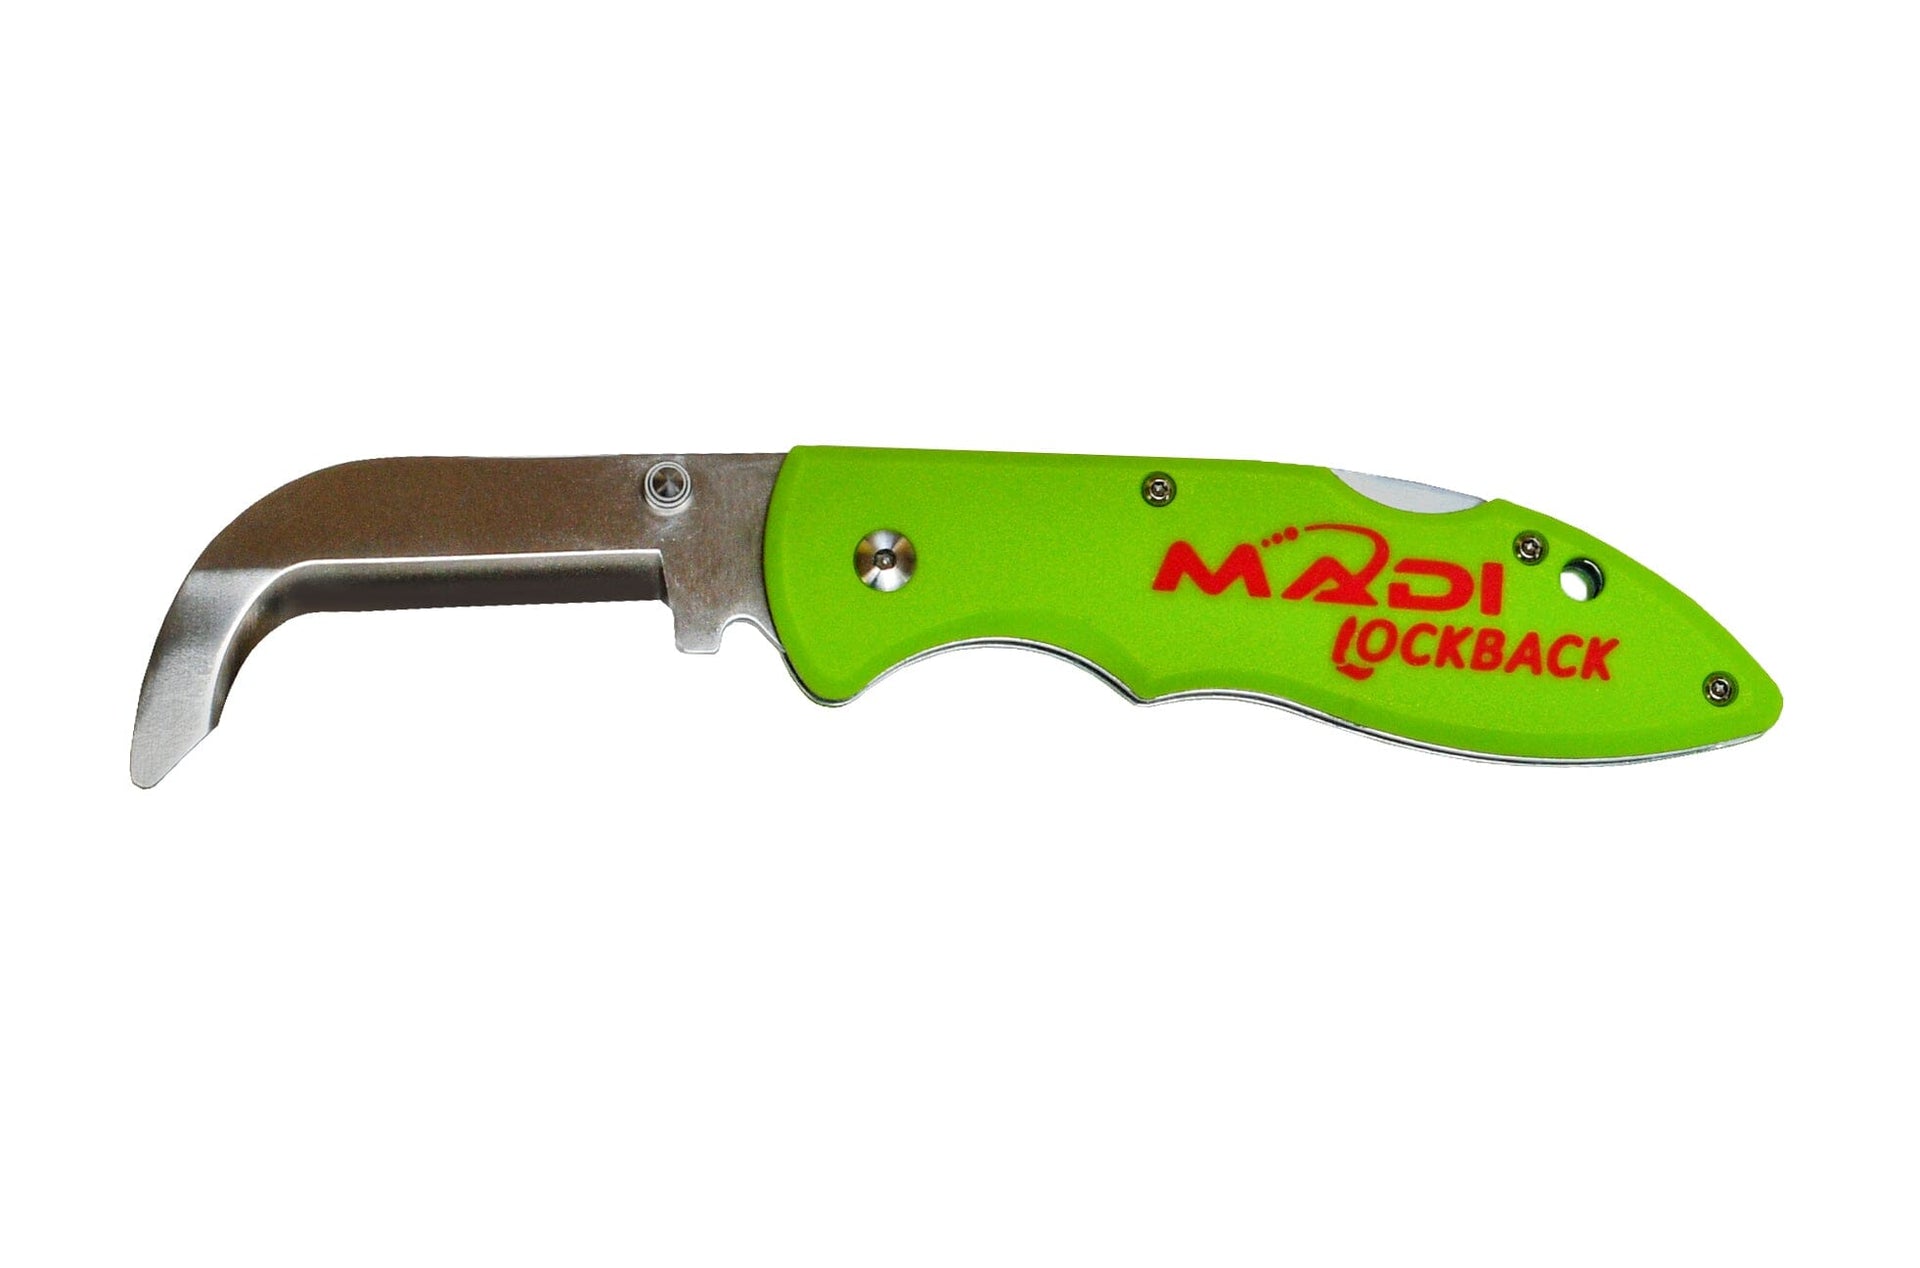 MADI OneFlip™ Safety Lineman Knife - MADI